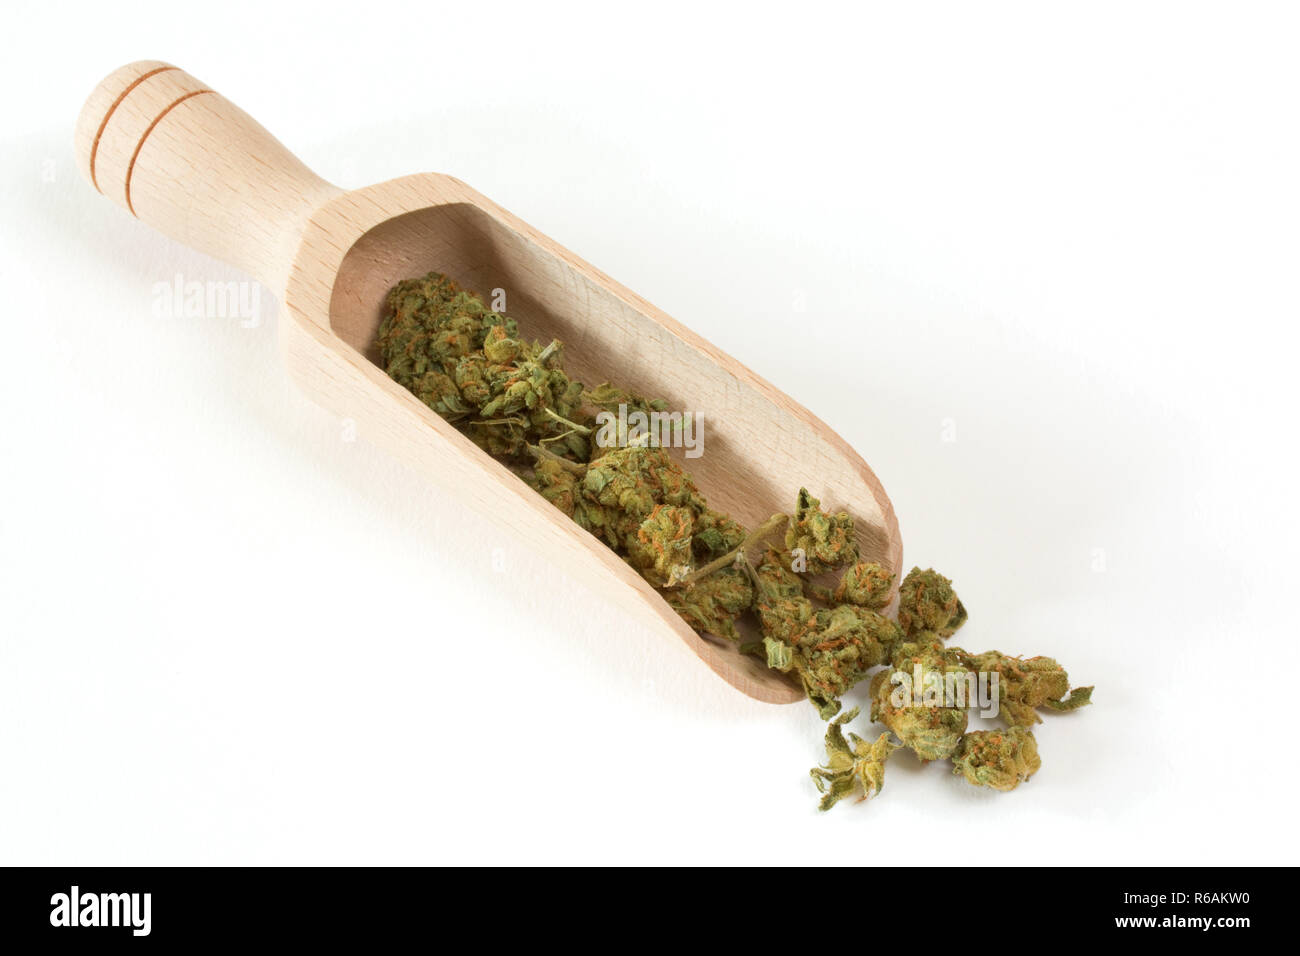 Hanfsamen, Samen, cannabis Stock Photo - Alamy